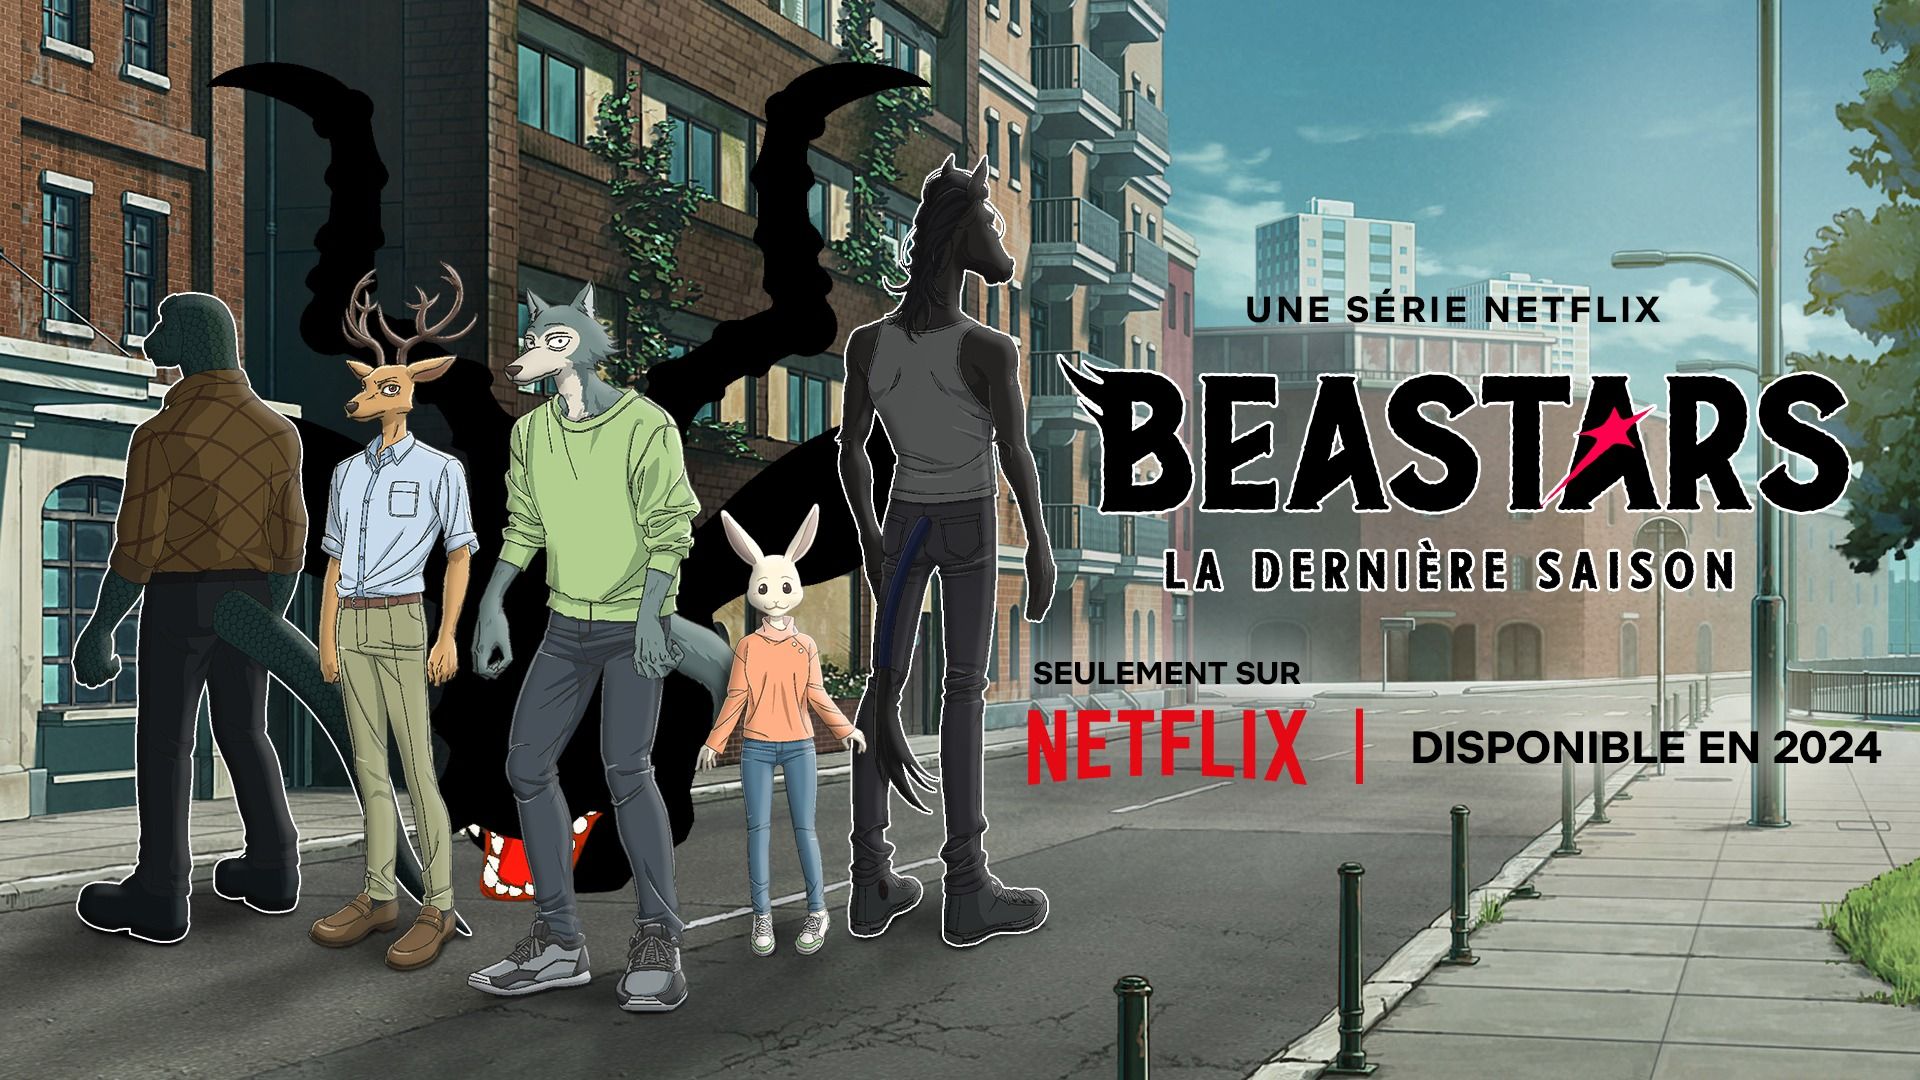 Beastars revient sur Netflix en 2024 !0